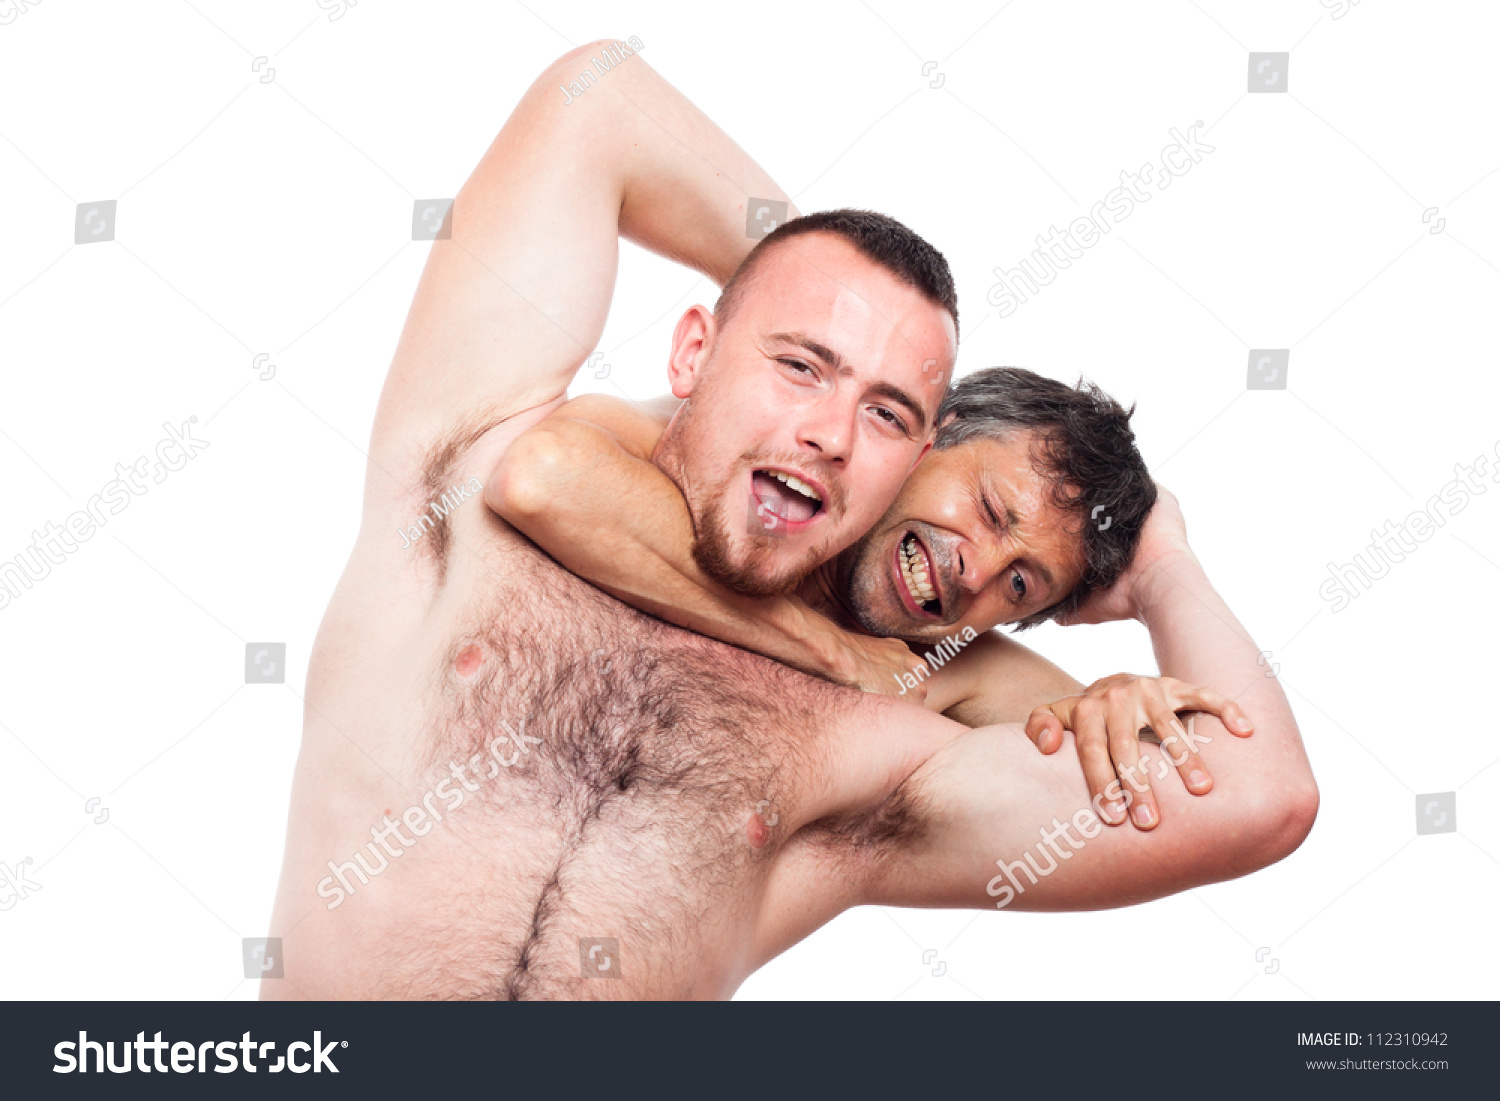 Nude Men Wrestling Pics 12